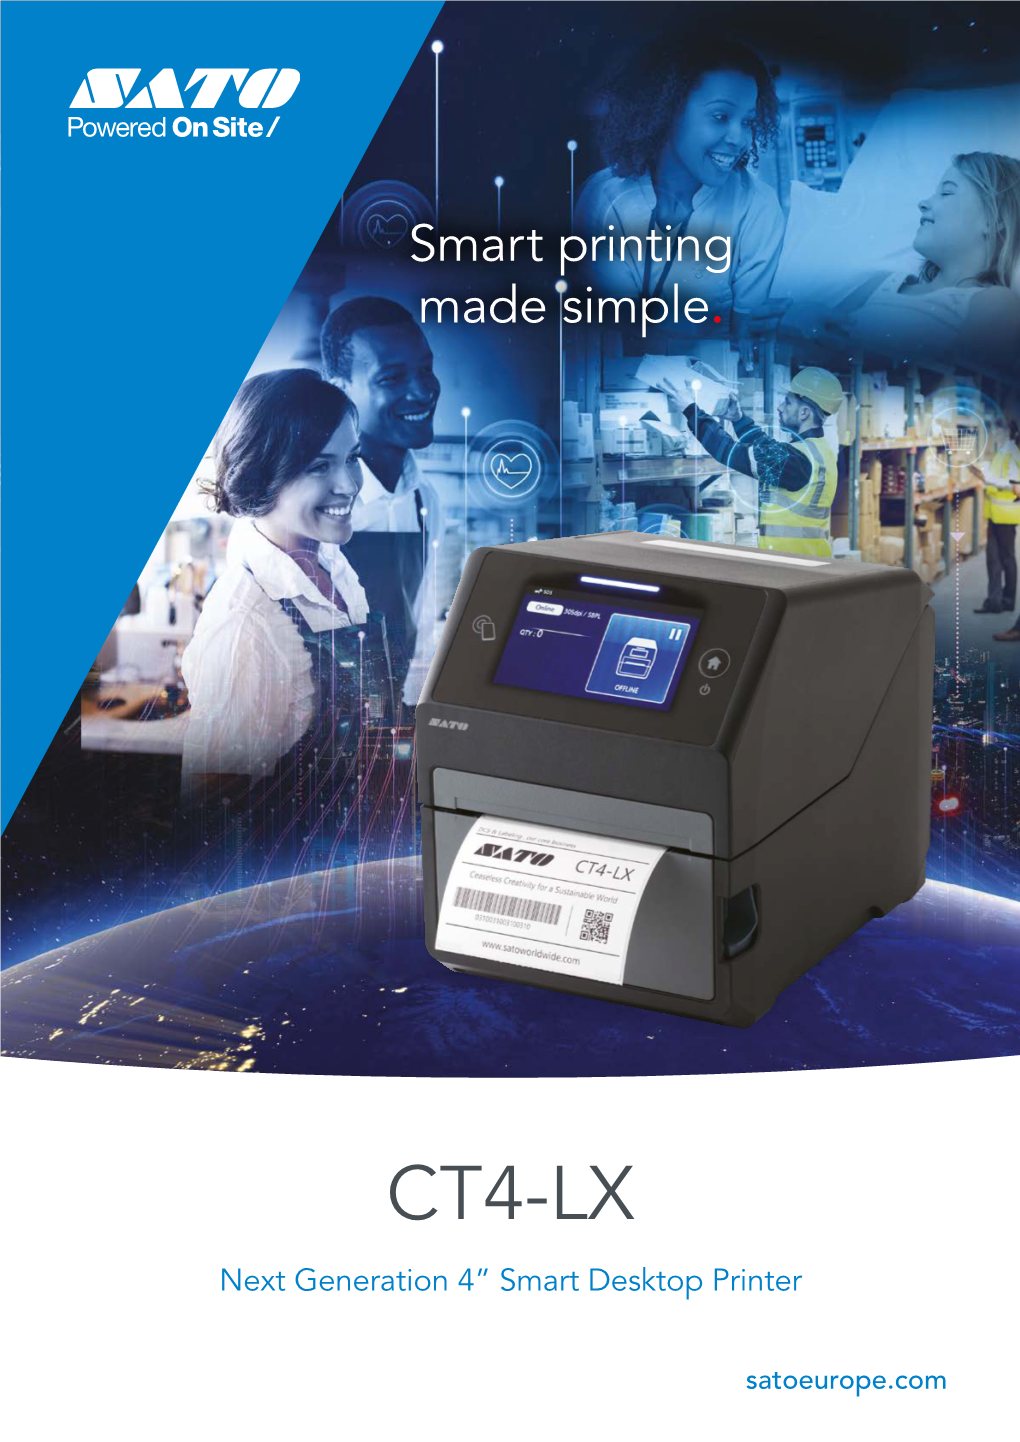 CT4-LX Next Generation 4” Smart Desktop Printer